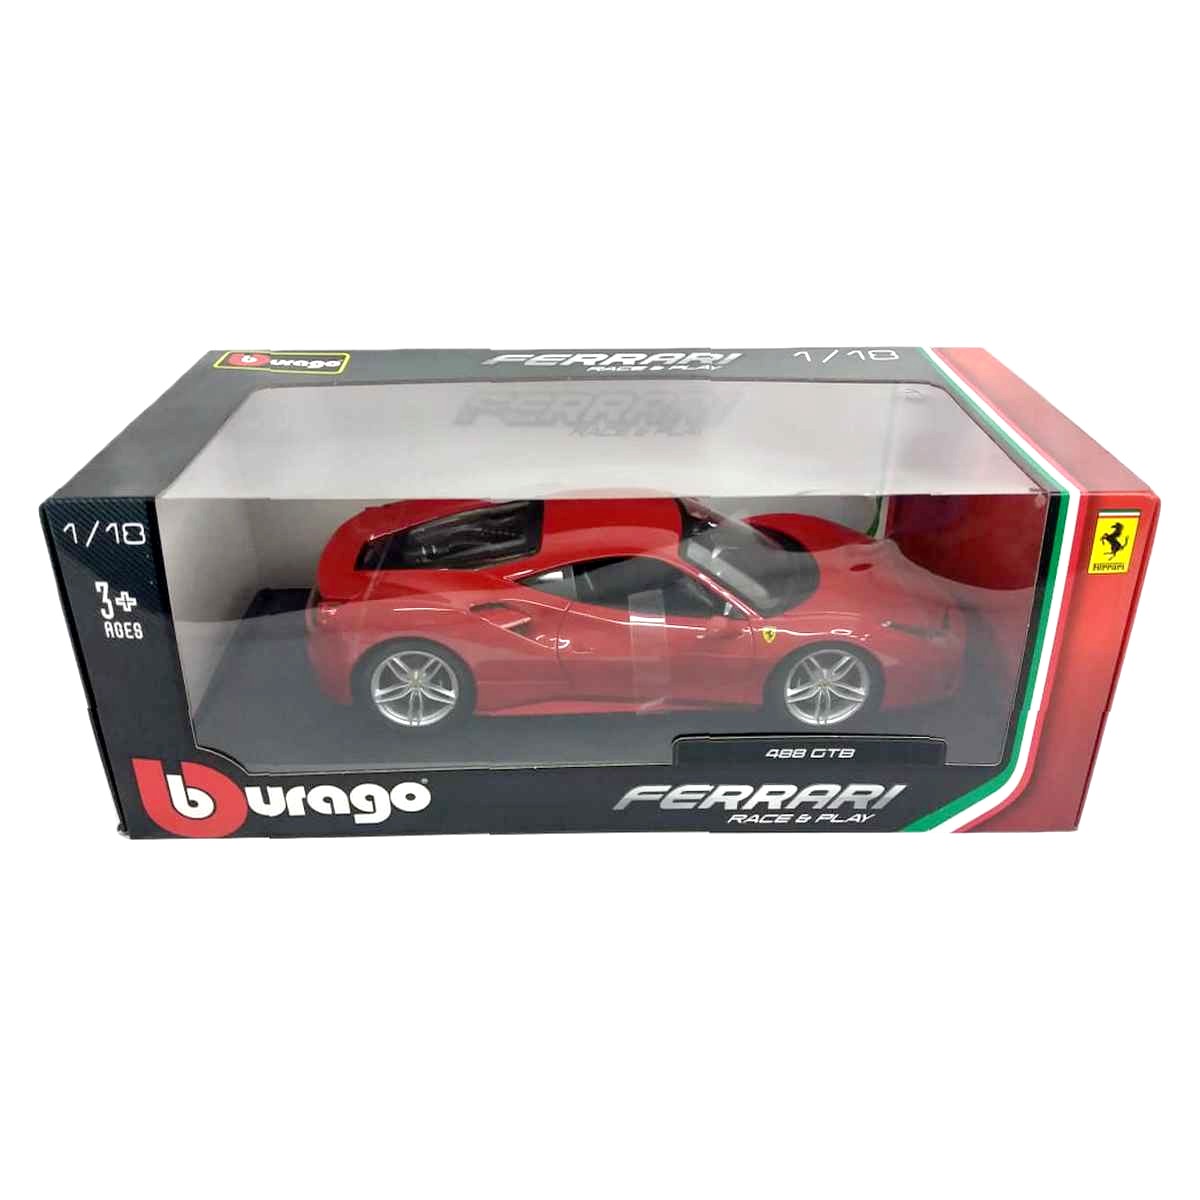 Bburago Ferrari 488 GTB vermelho escala 1/18 Race & Play 16008